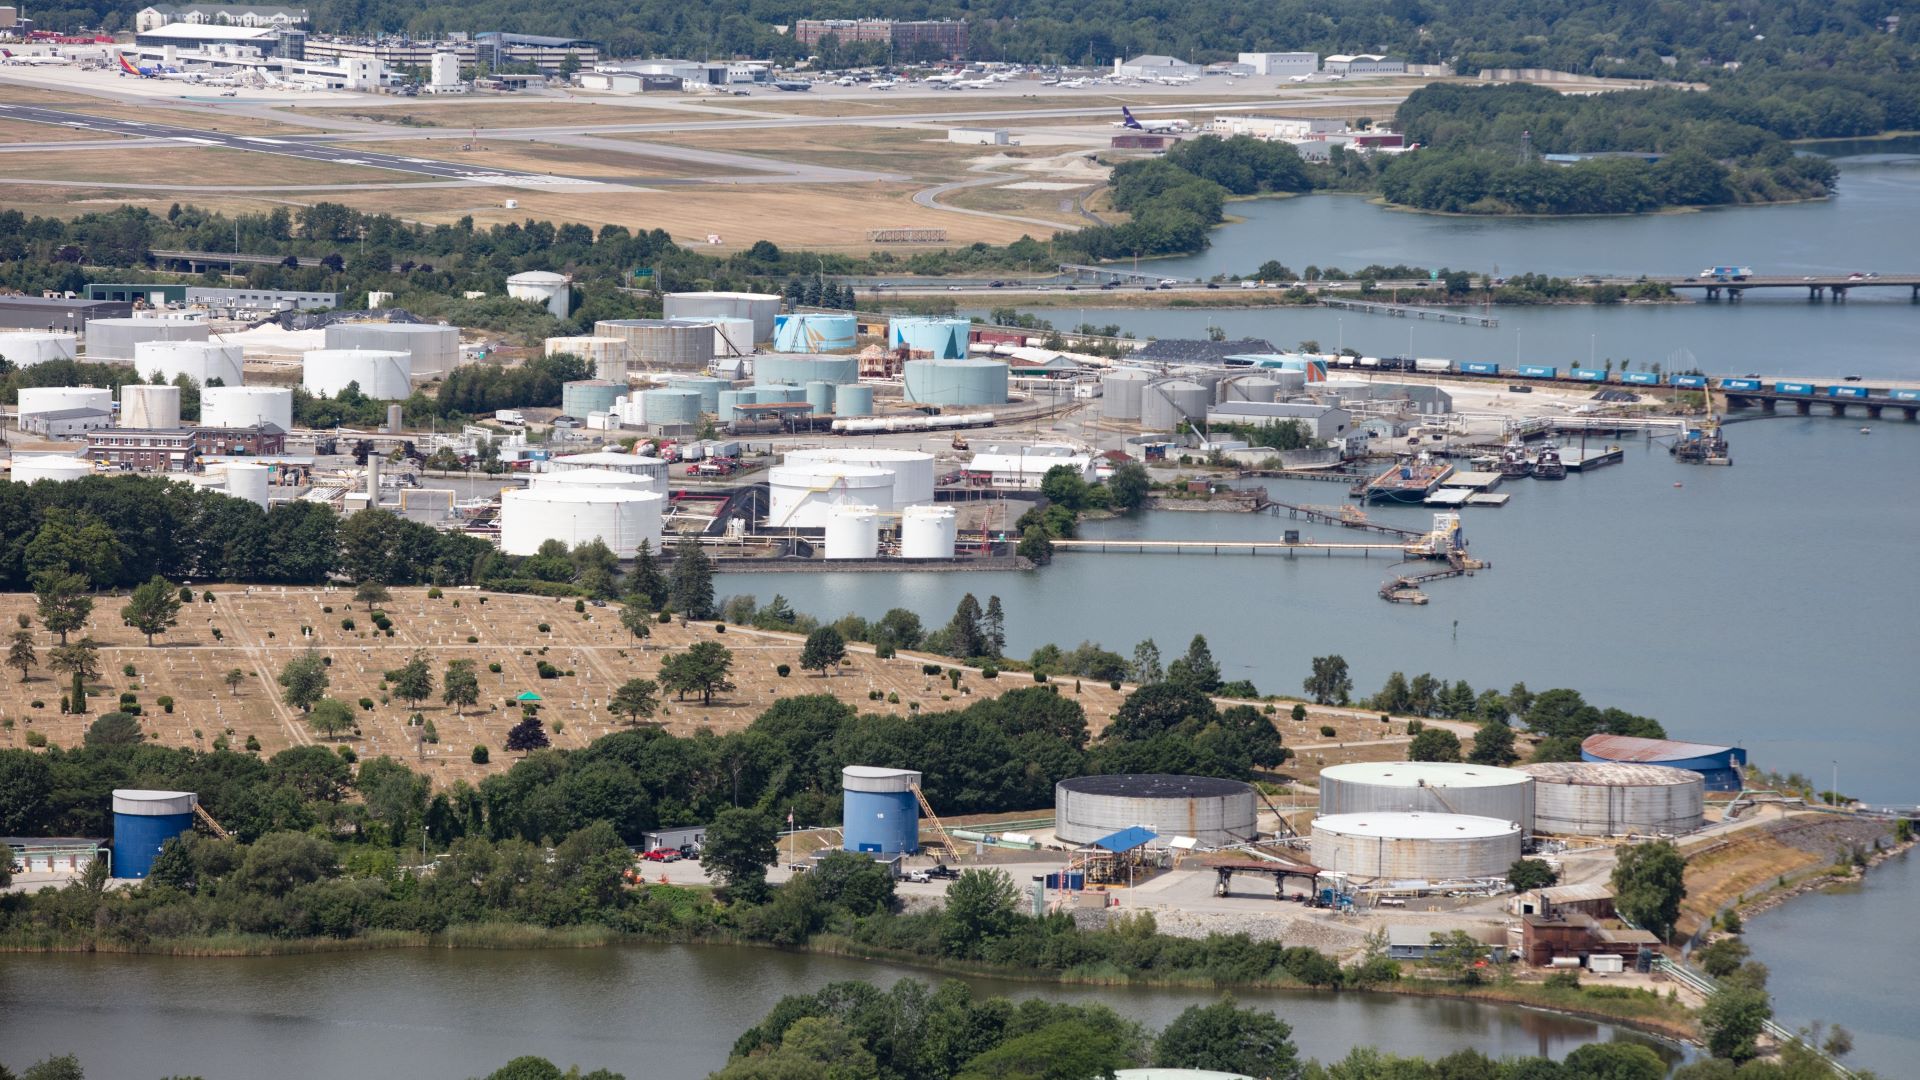 South Portland: A vital petroleum hub